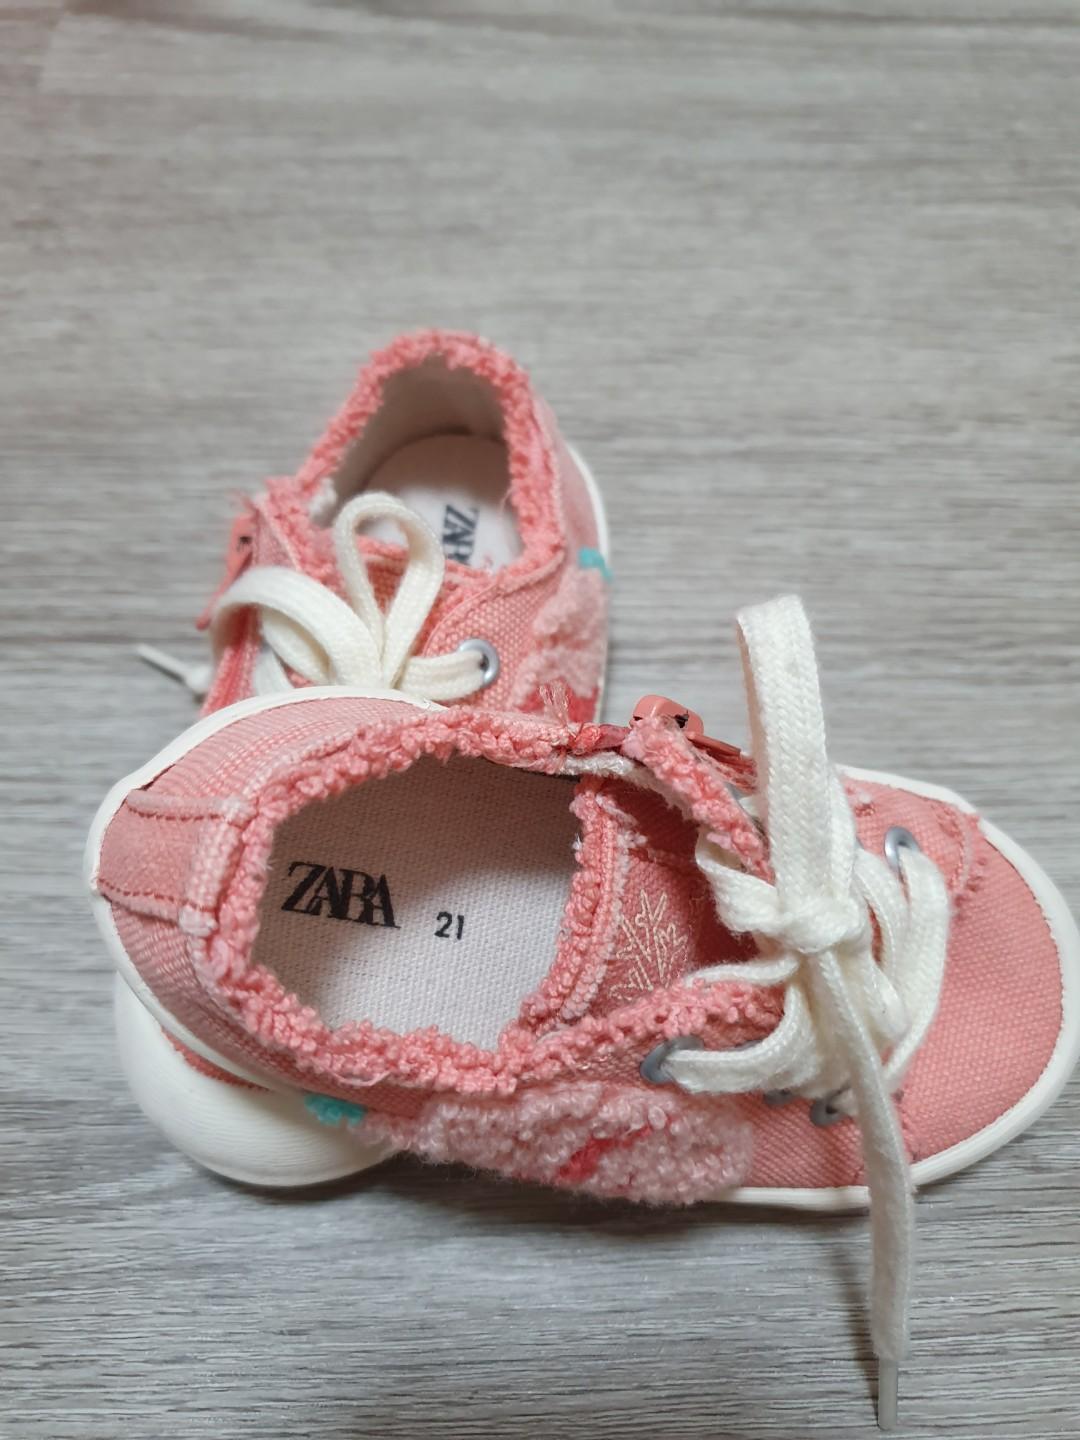 zara baby shoe